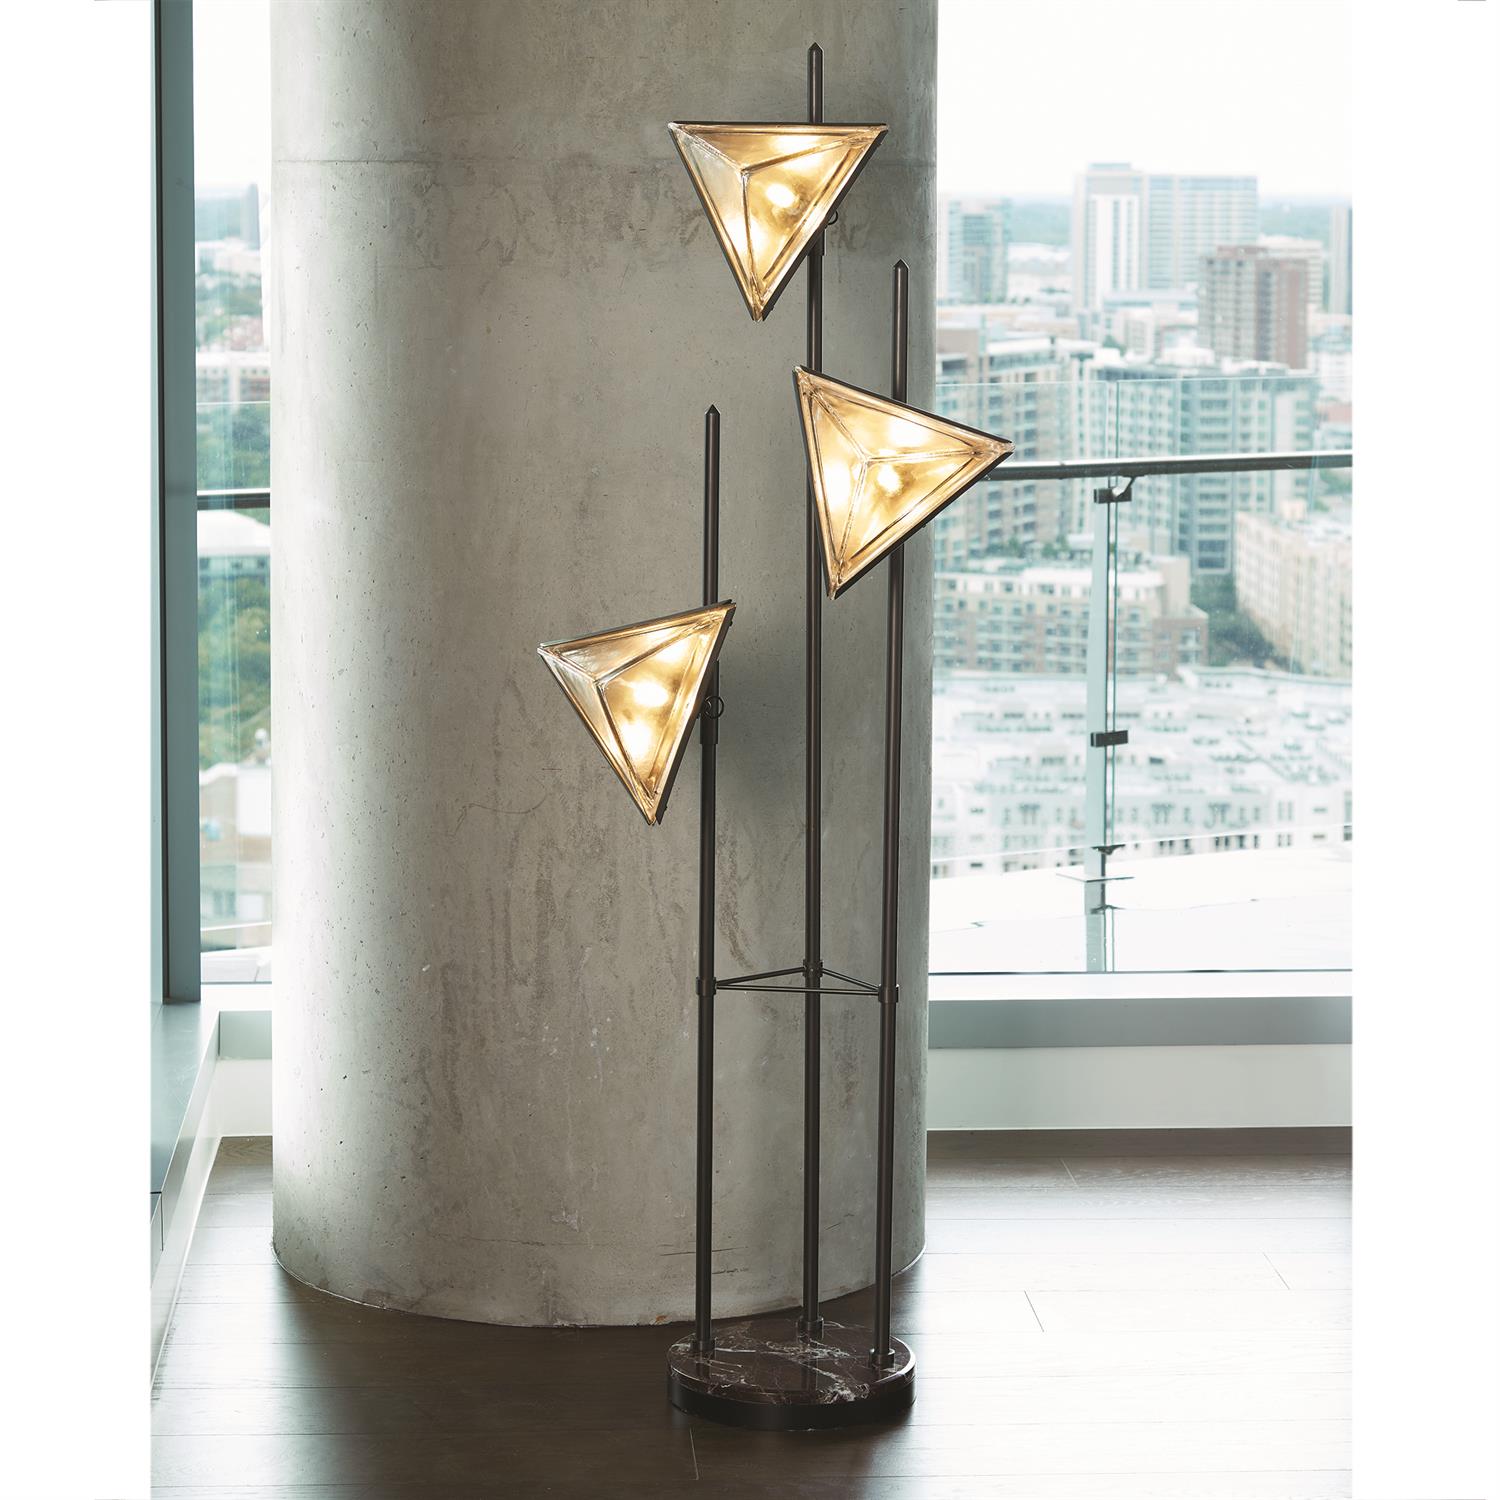 Celeste Floor Lamp - Grats Decor Interior Design & Build Inc.